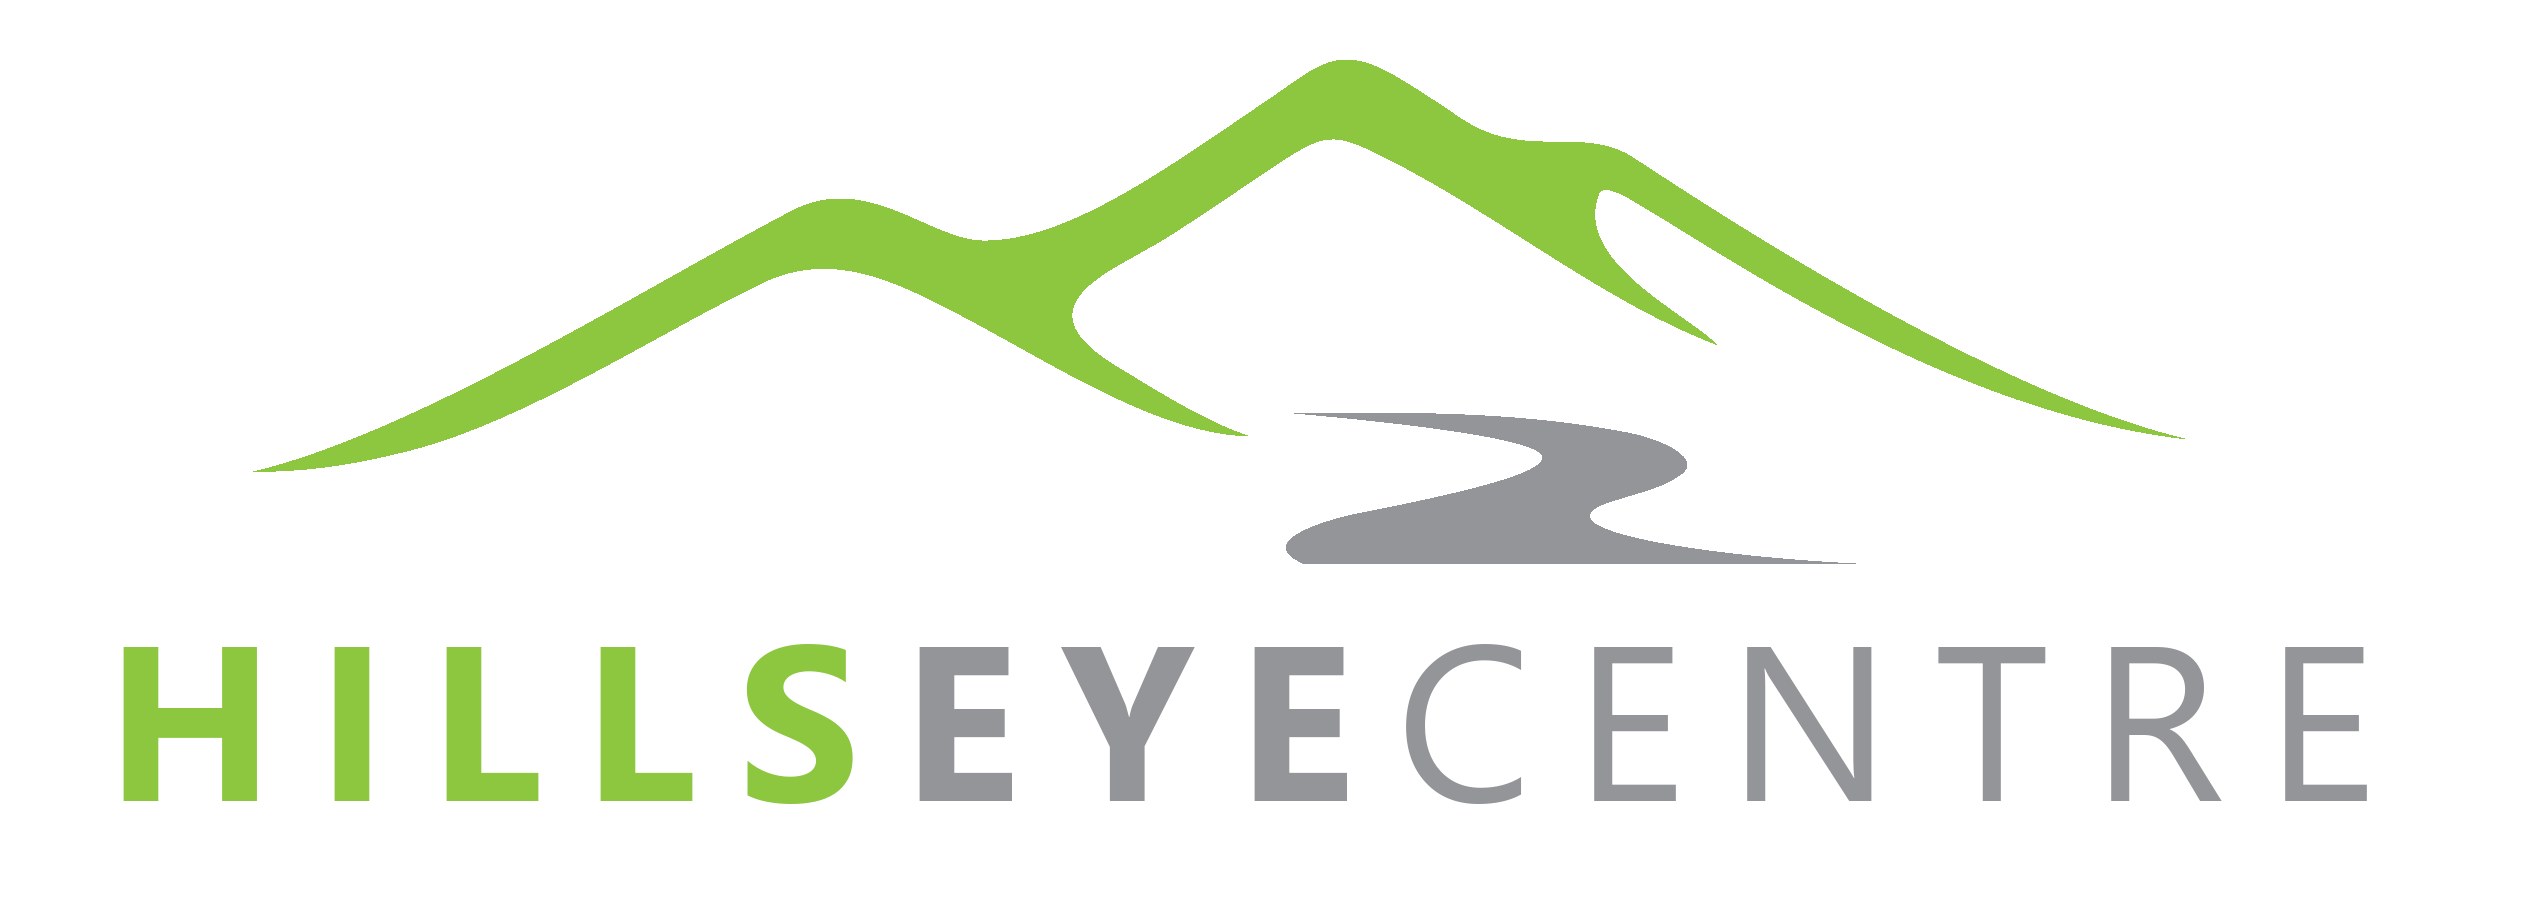 Hills Eye Centre Logo